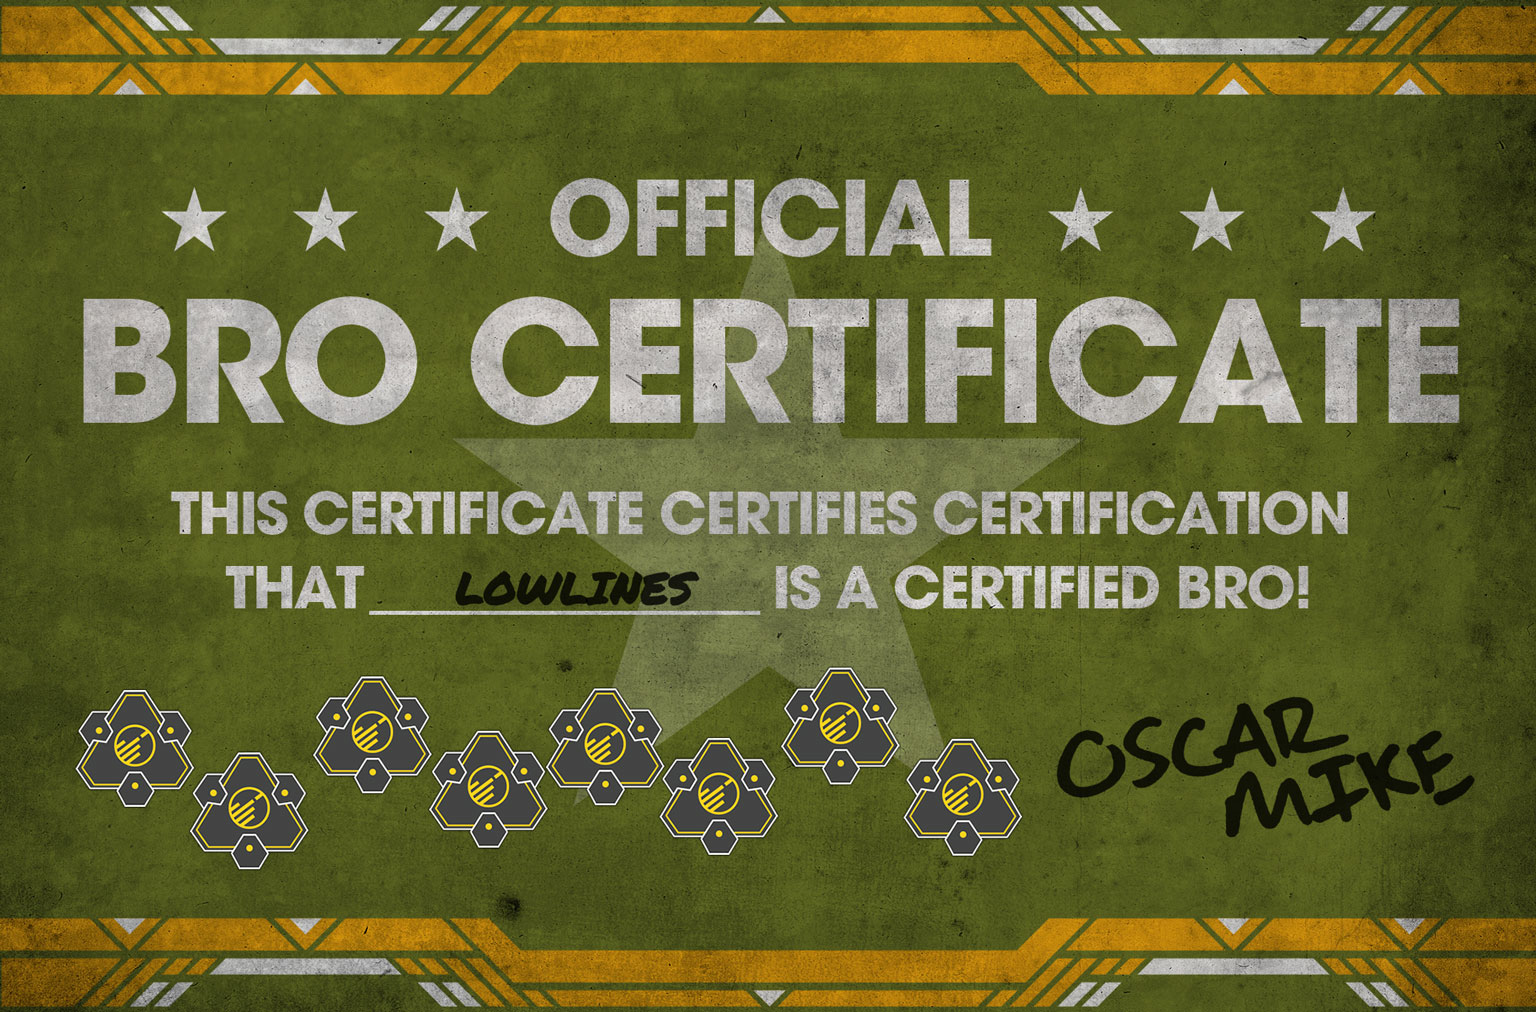 The Bro Certificate, designed by Mentalmars, Beya and Jim Foronda